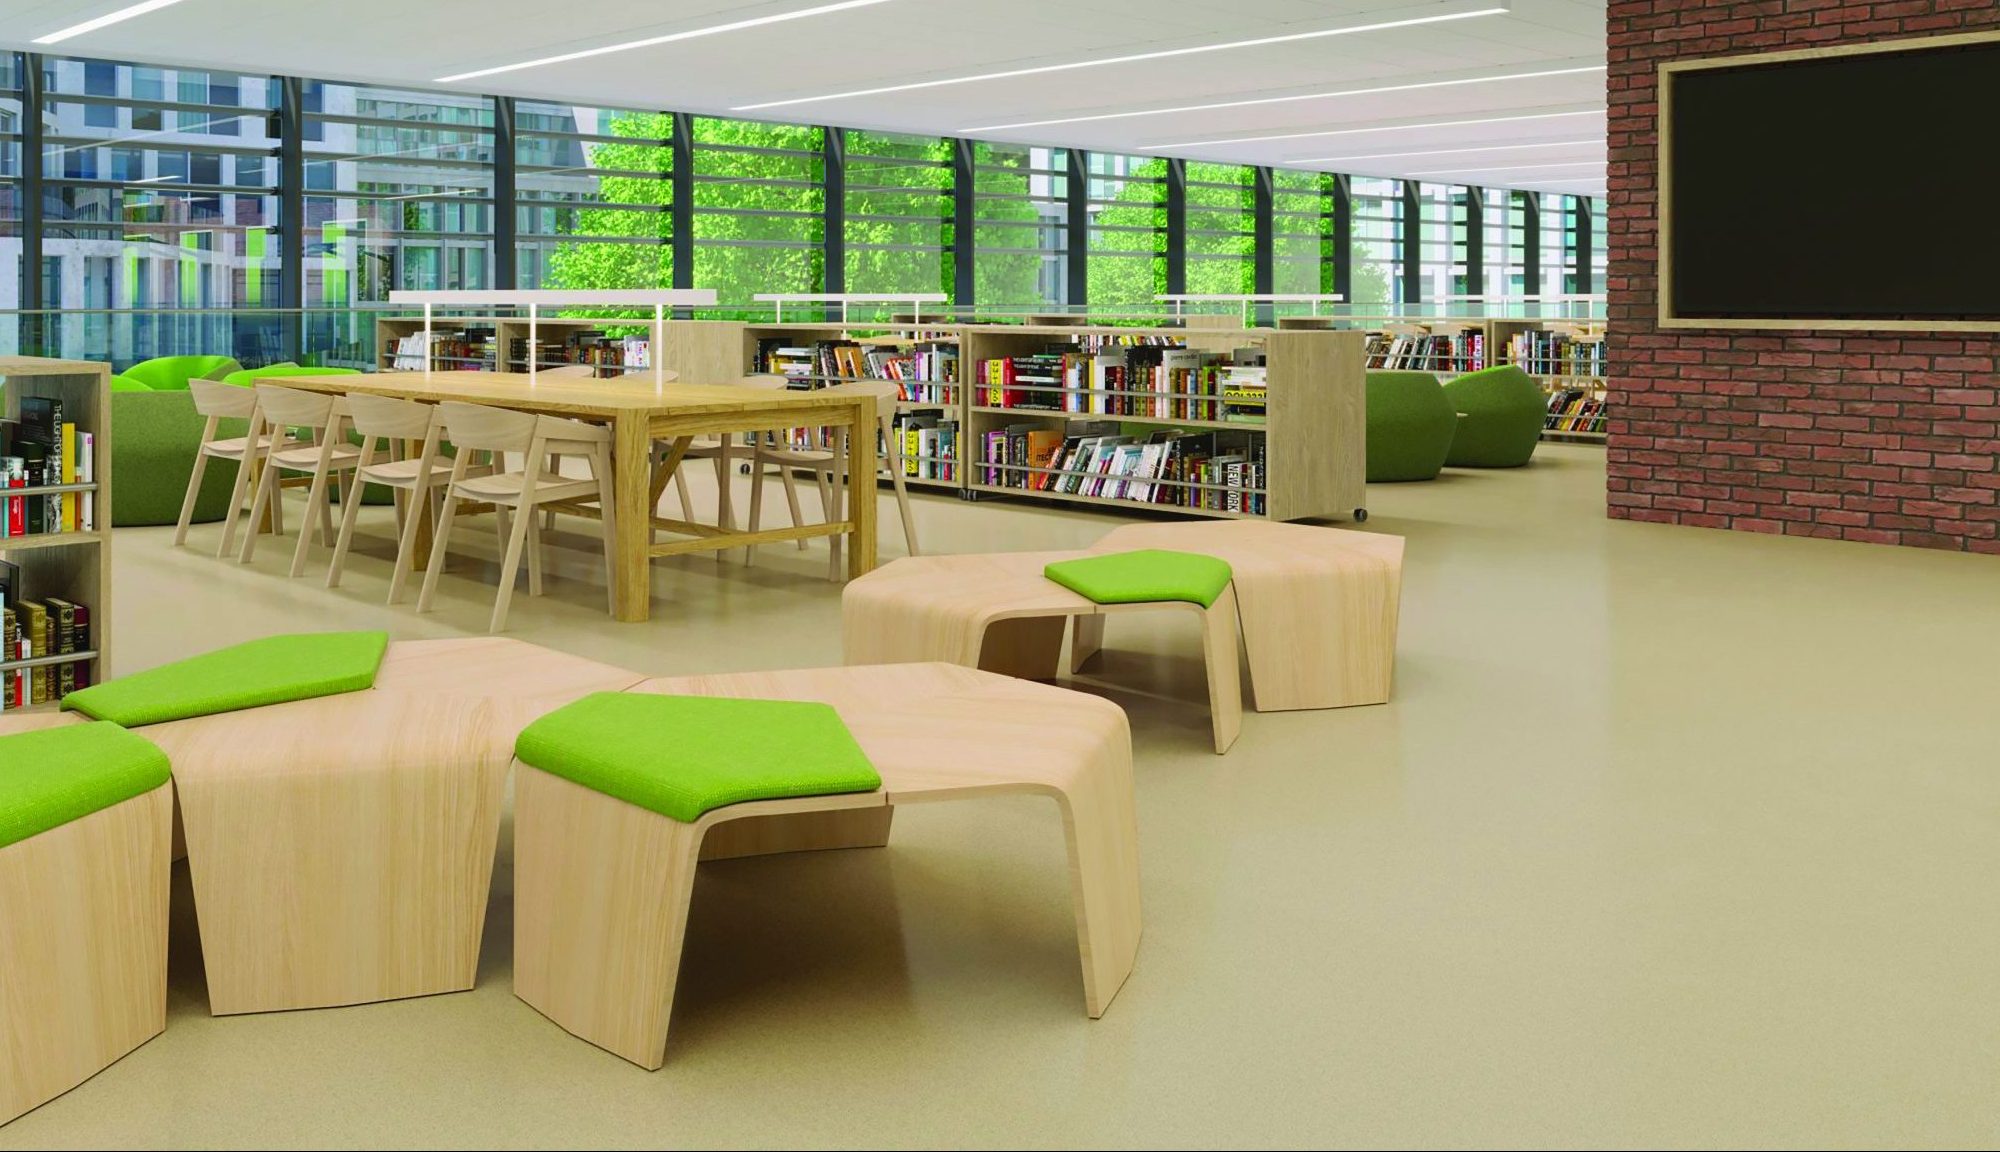 DURAGRIP Linen laid in modern library